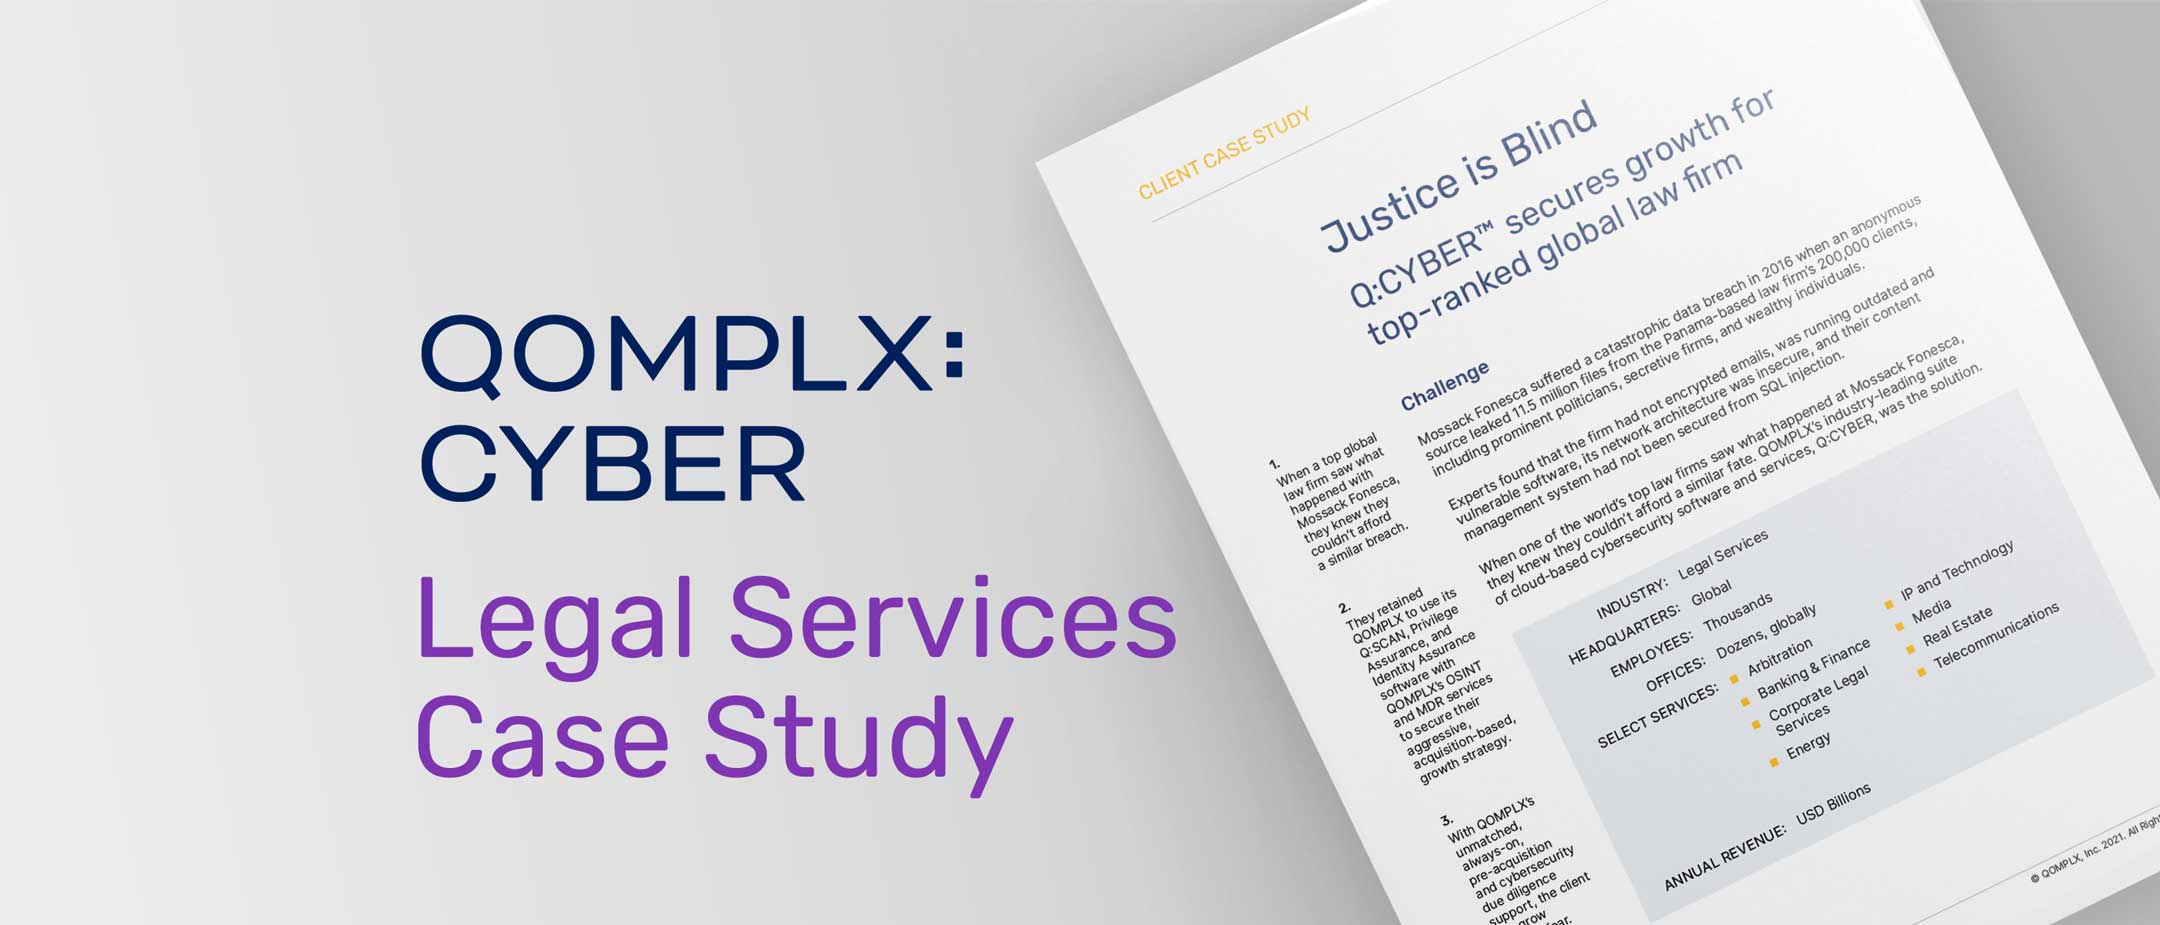 QOMPLX:CYBER Legal Services Case Study